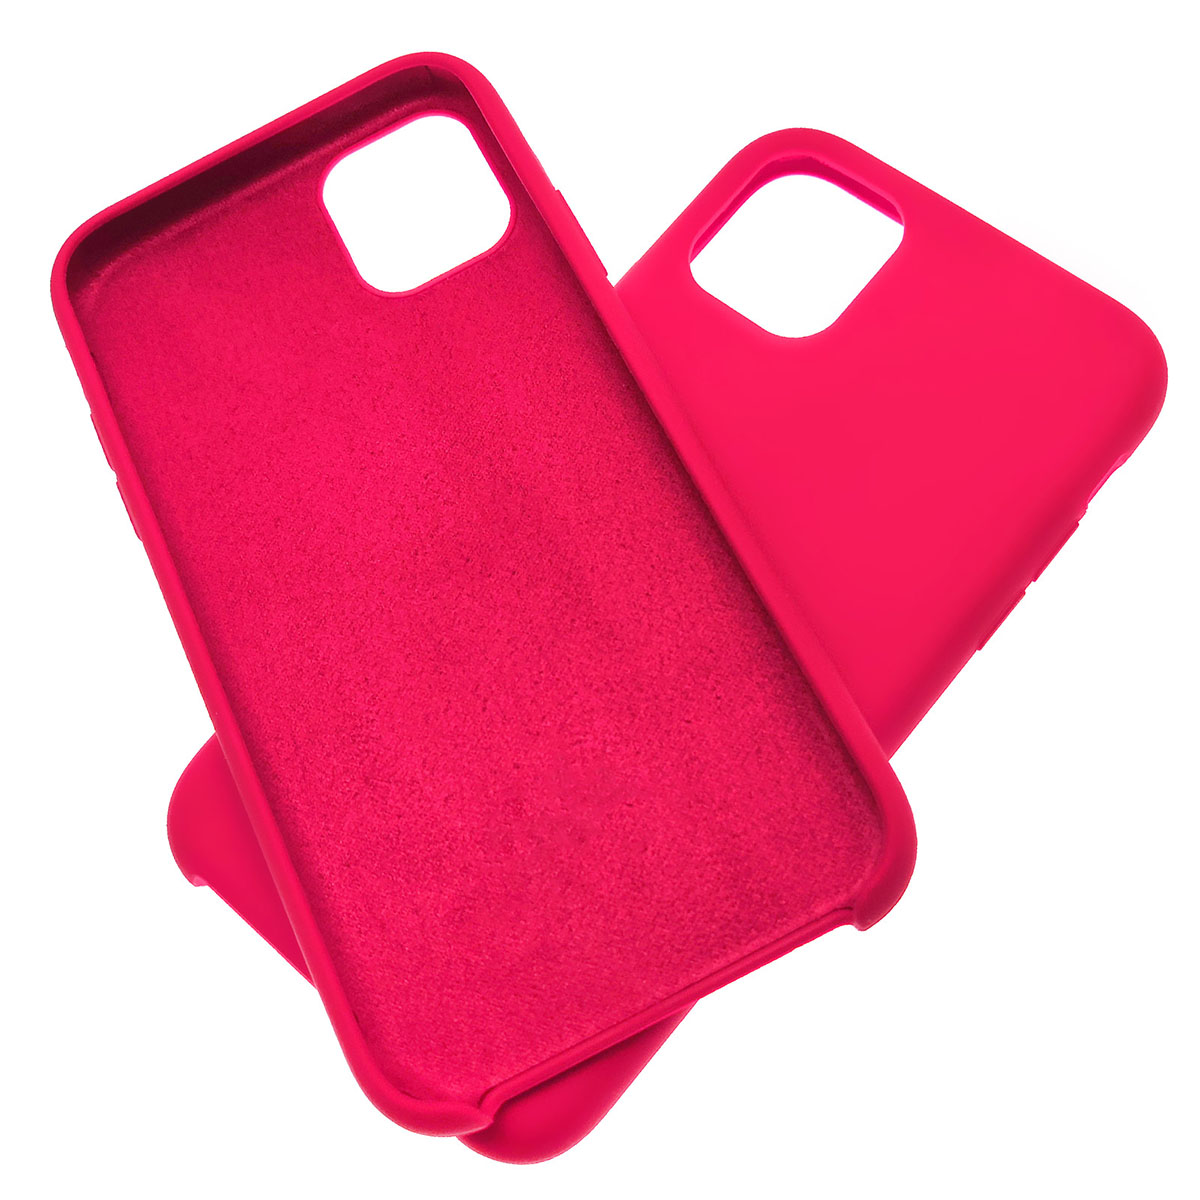 Чехол накладка Silicon Case для APPLE iPhone 11 Pro MAX 2019, силикон, бархат, цвет питайя.